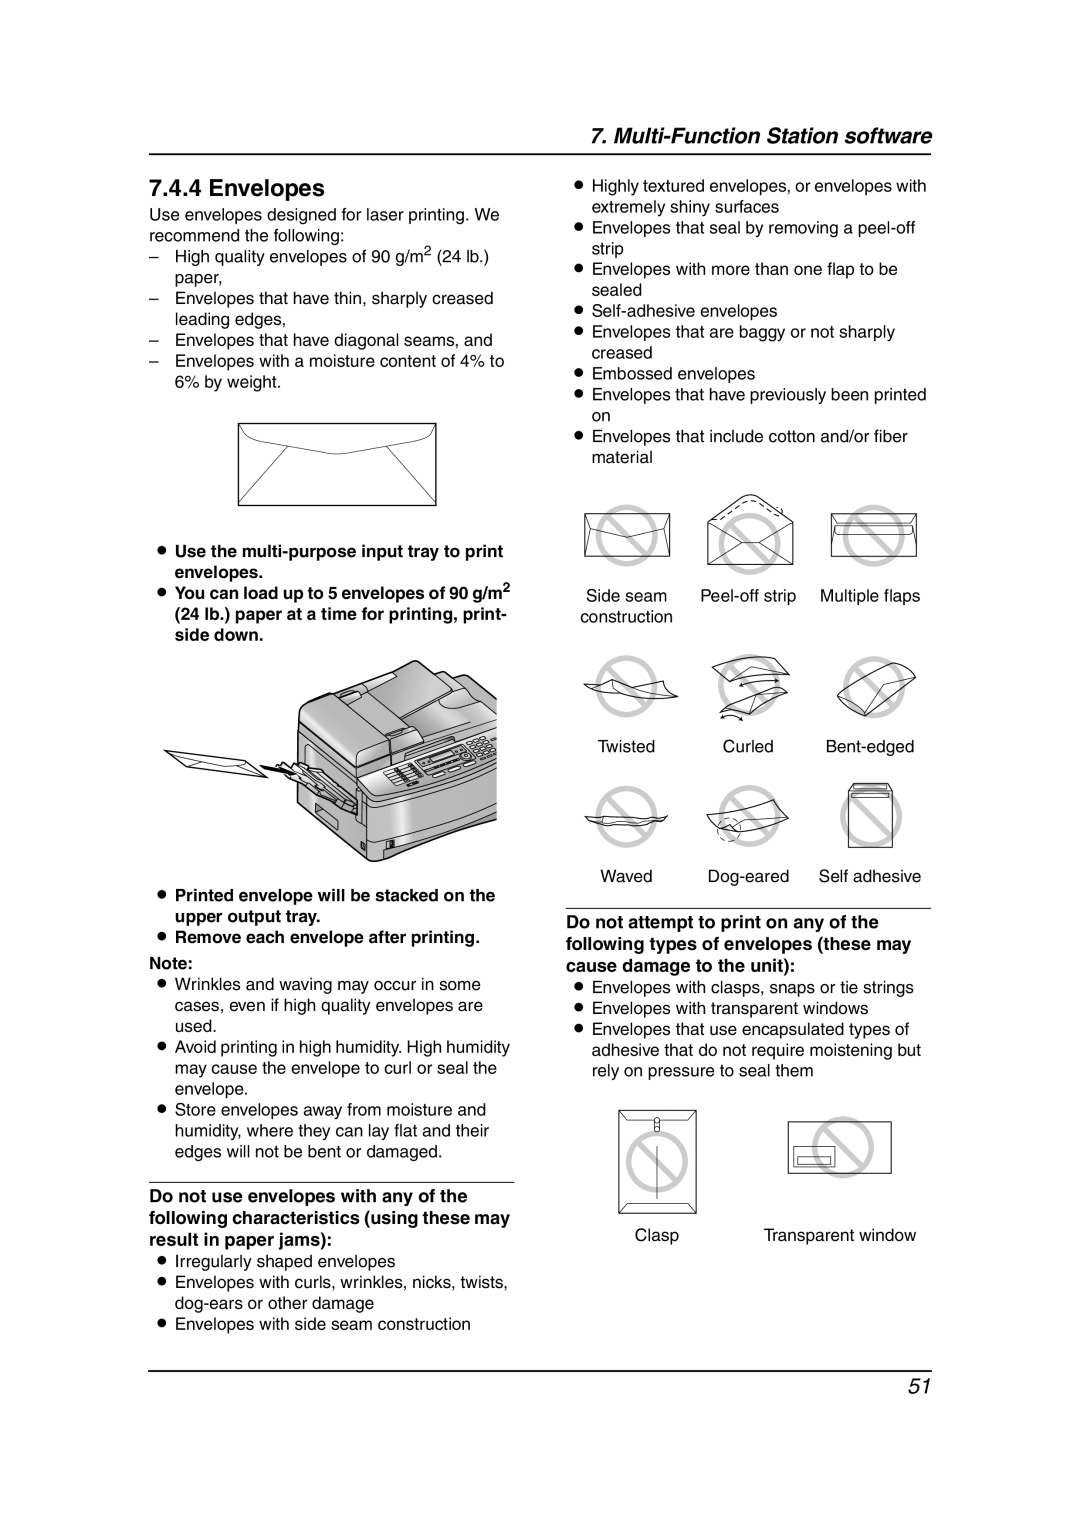 Panasonic KX-FLB851 Envelopes, L Use the multi-purpose input tray to print envelopes, Multi-Function Station software 